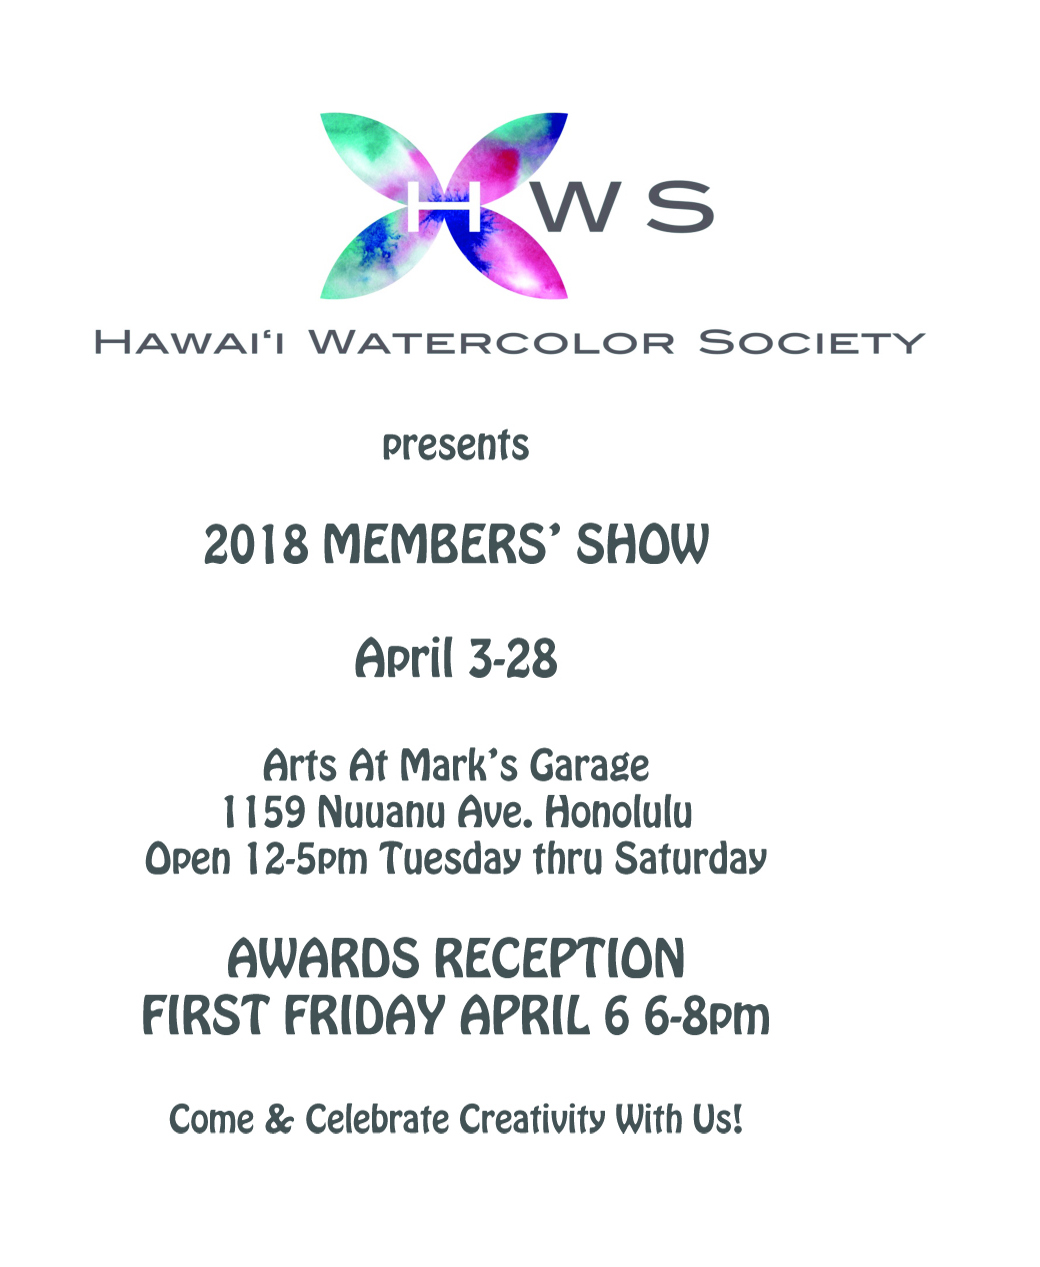 hawaii-watercolor-societys-annual-members-show--arts-at-marks-garage-april-3-28-2018-1.jpg